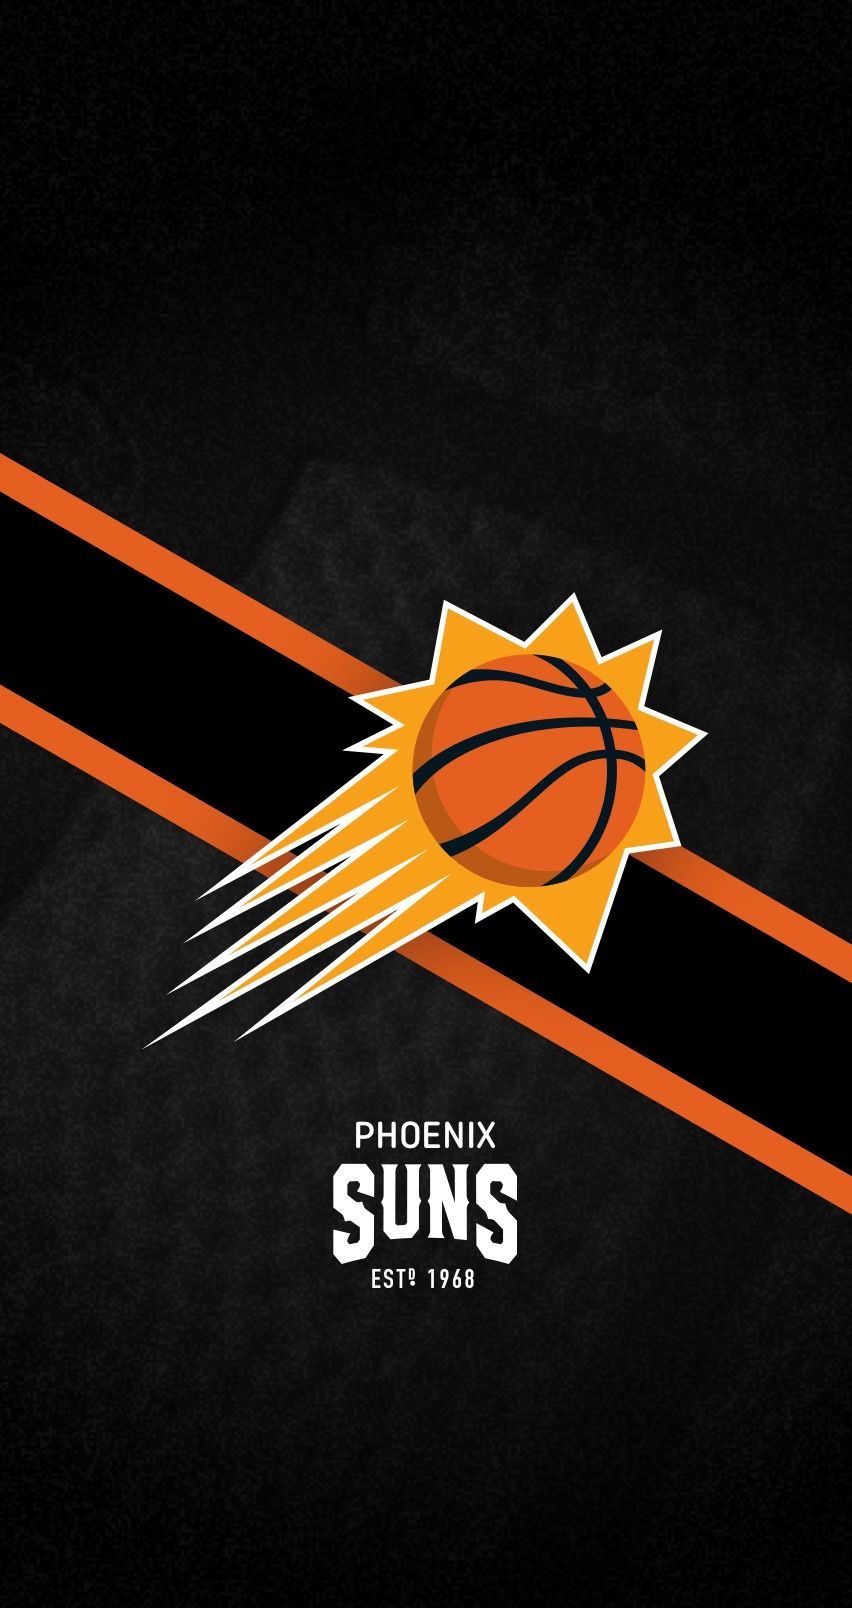 Phoenix Suns ideas. phoenix suns, nba, nba players